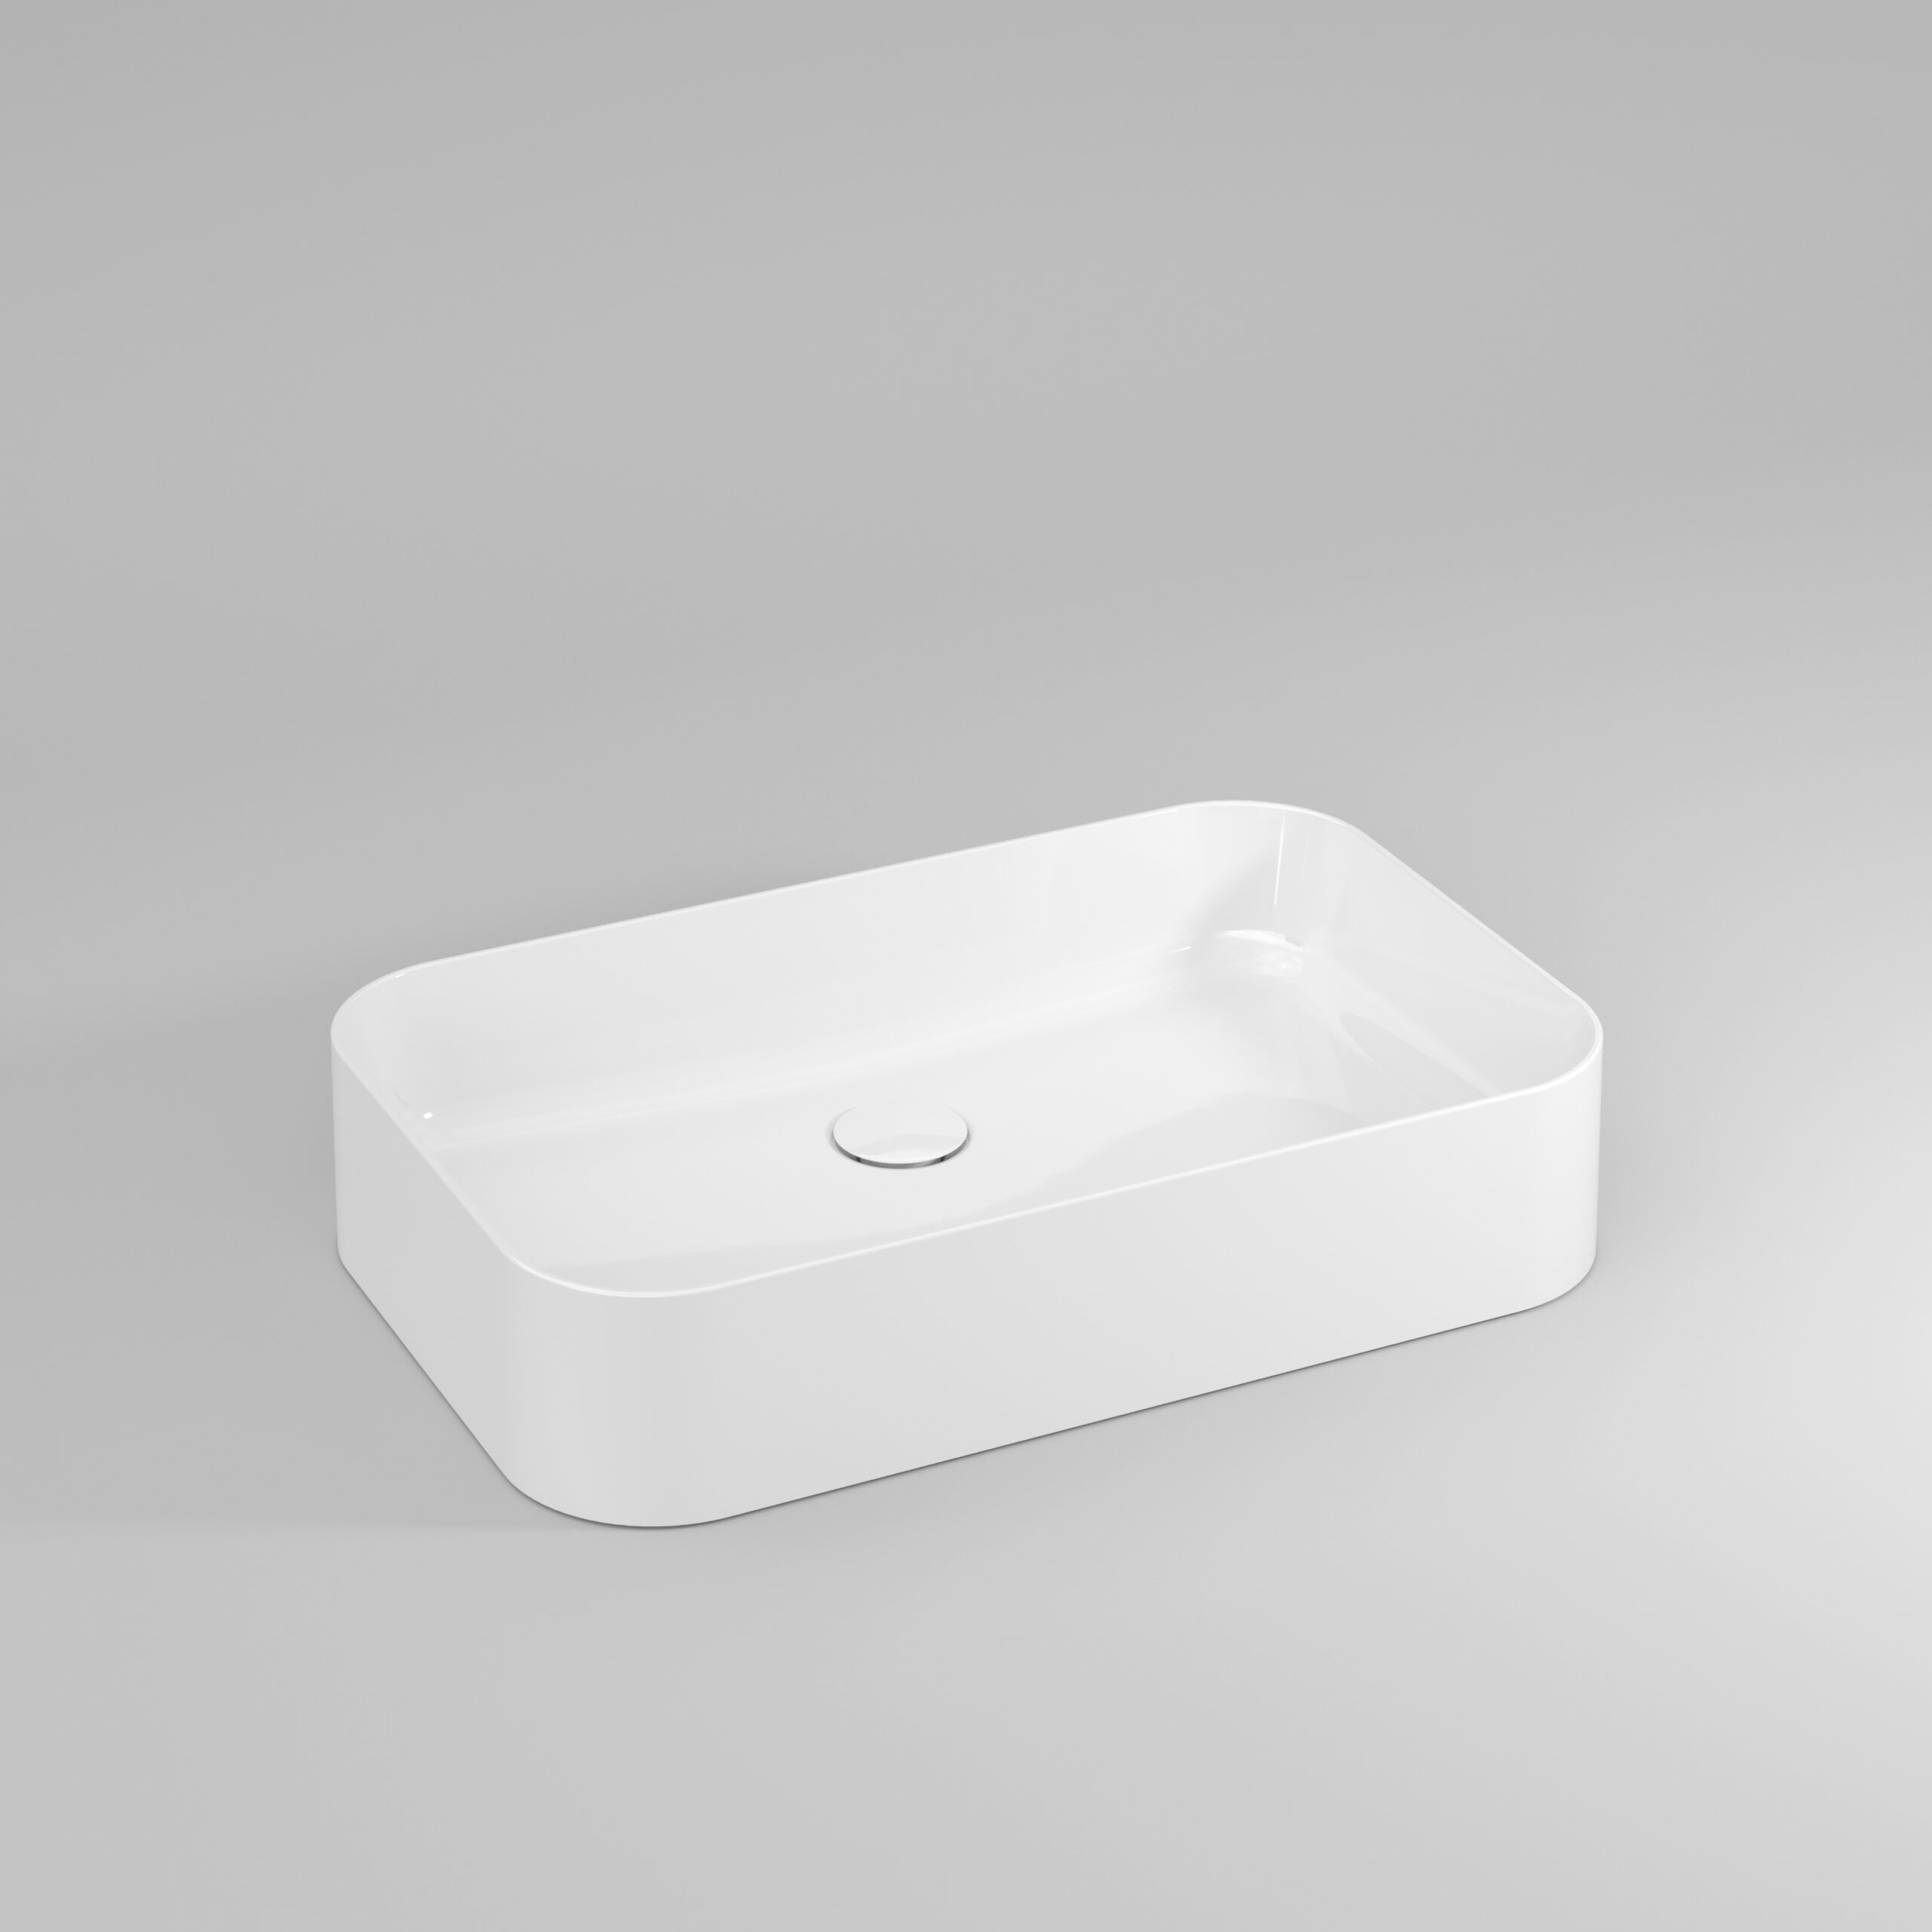 Slim countertop washbasin